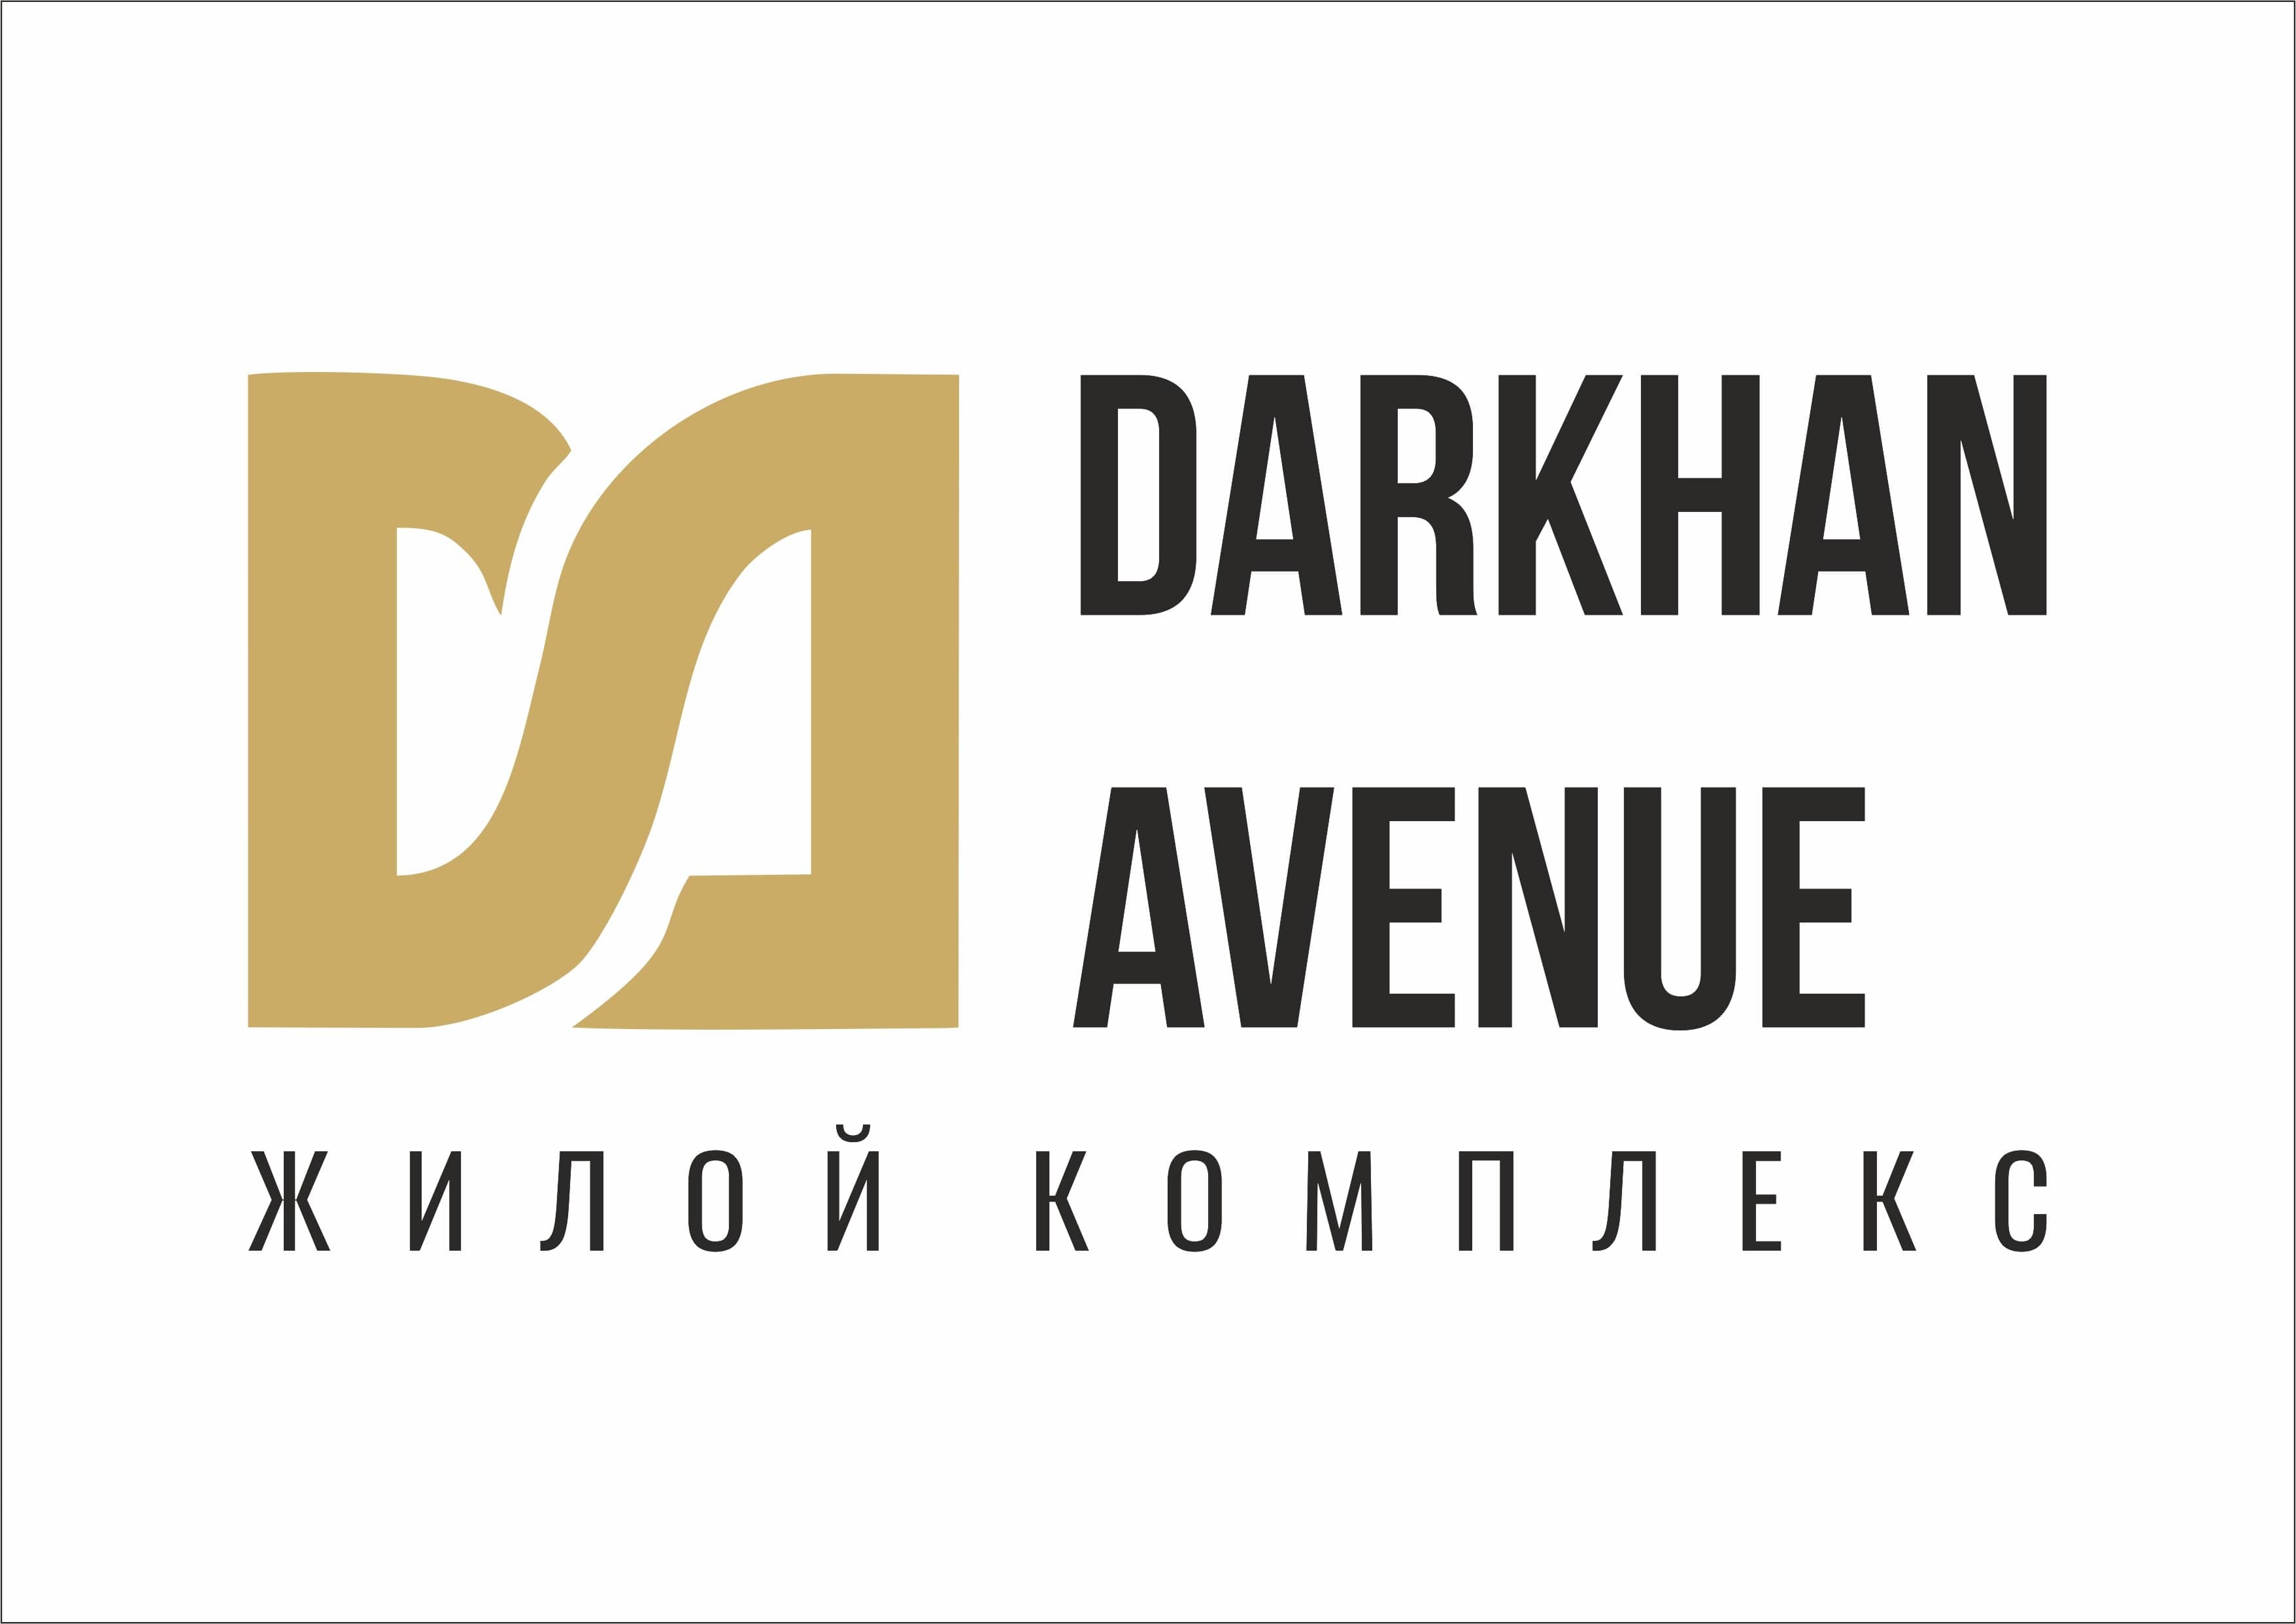 Residential complex Darkhan Avenue